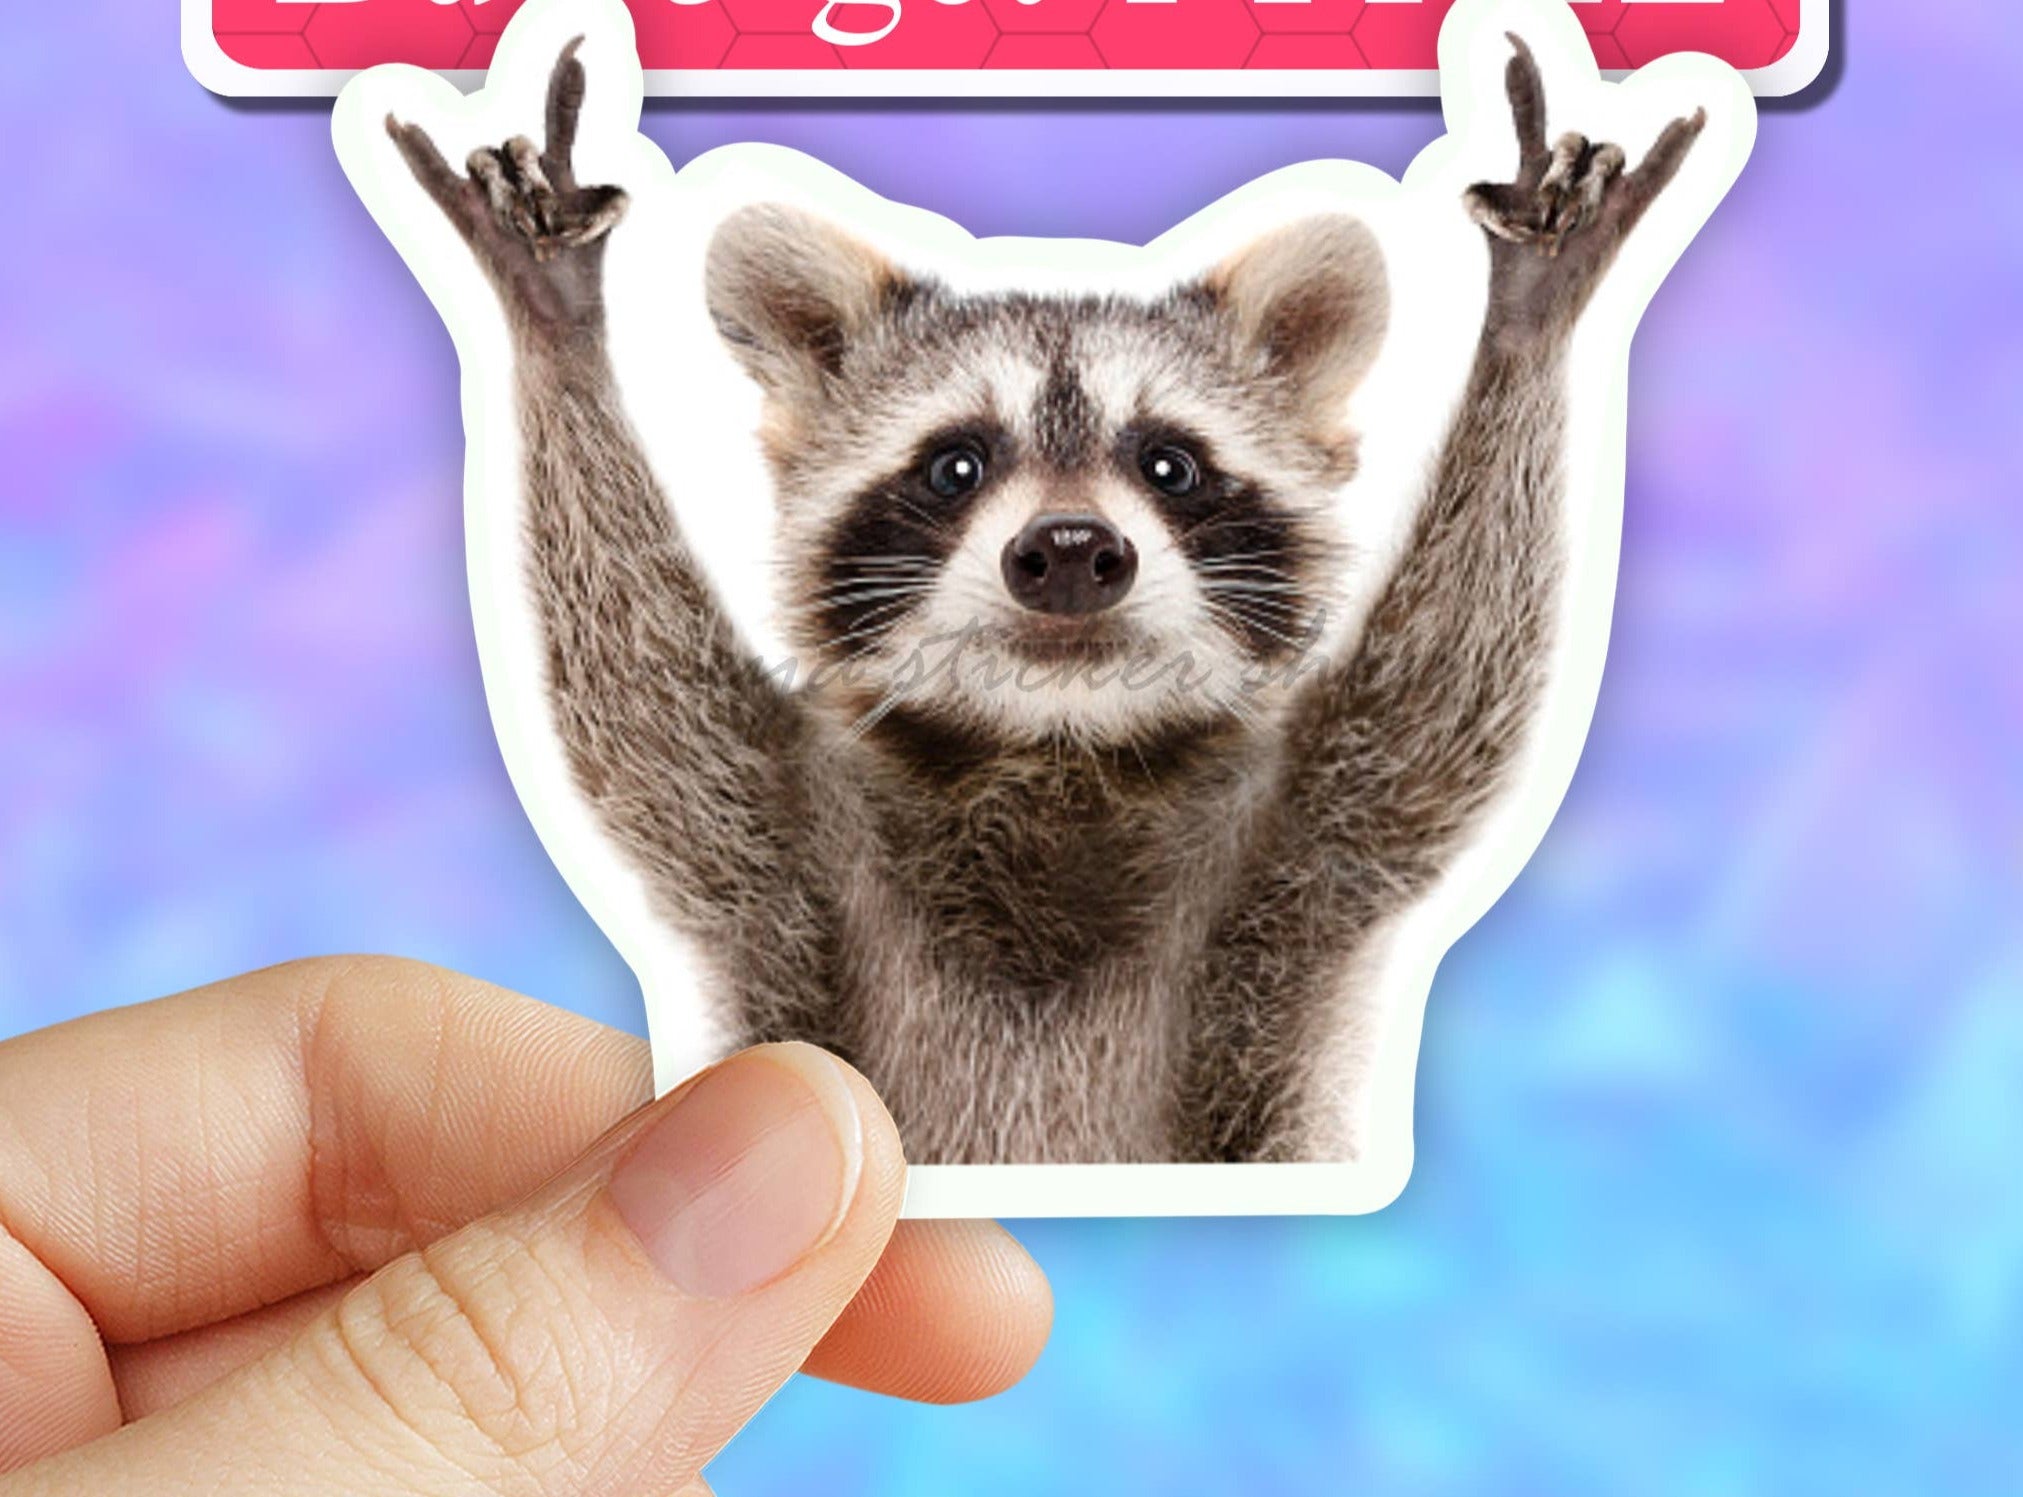 Raccoon rock sign meme stickers, trash panda decal, funny sticker meme: 2" (Mini)